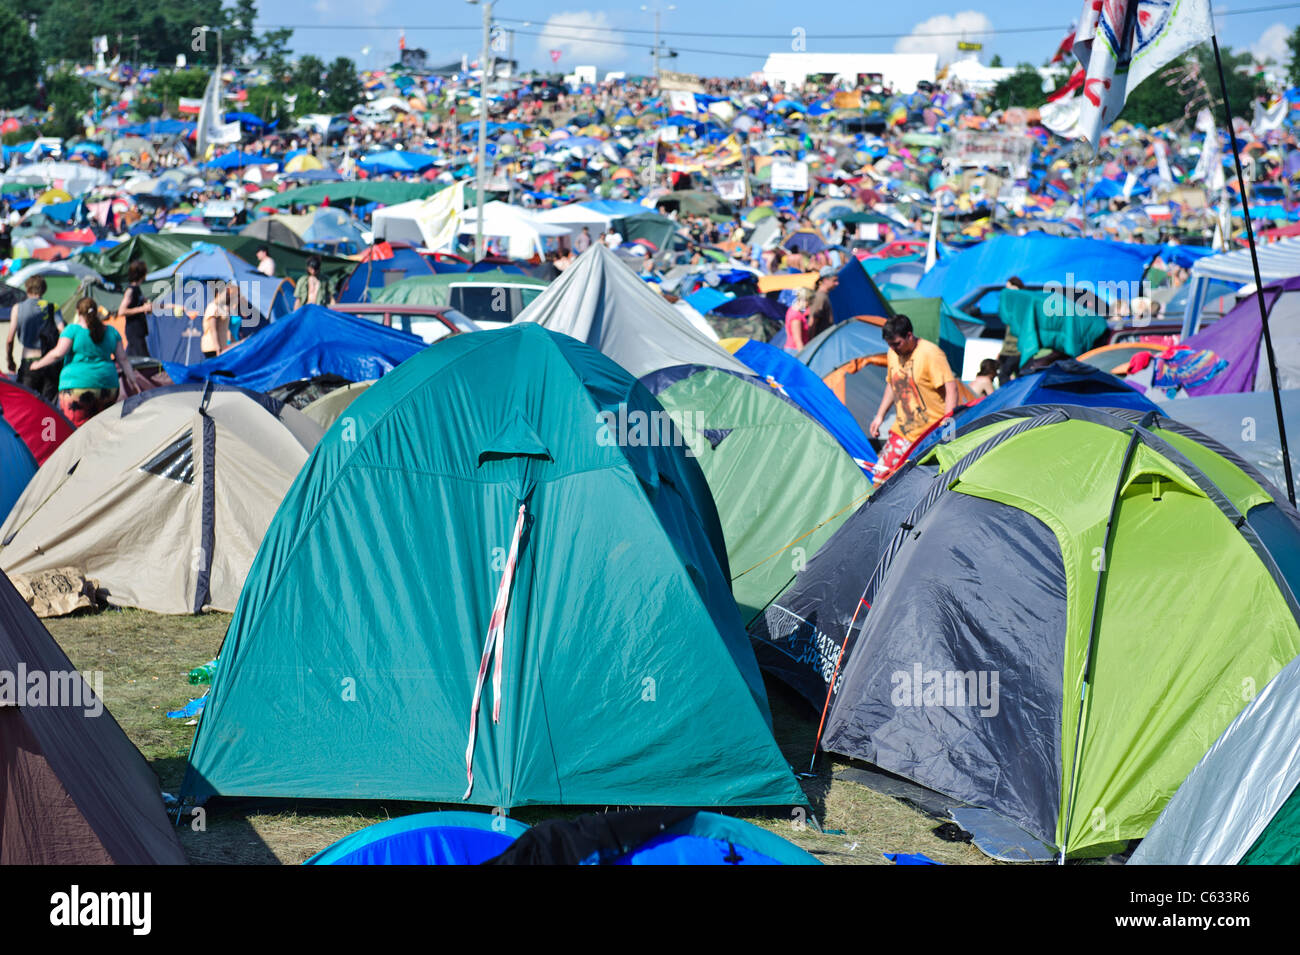 tents at the Przystanek Woodstock - Europe's largest open air festival in Kostrzyn, Poland Stock Photo